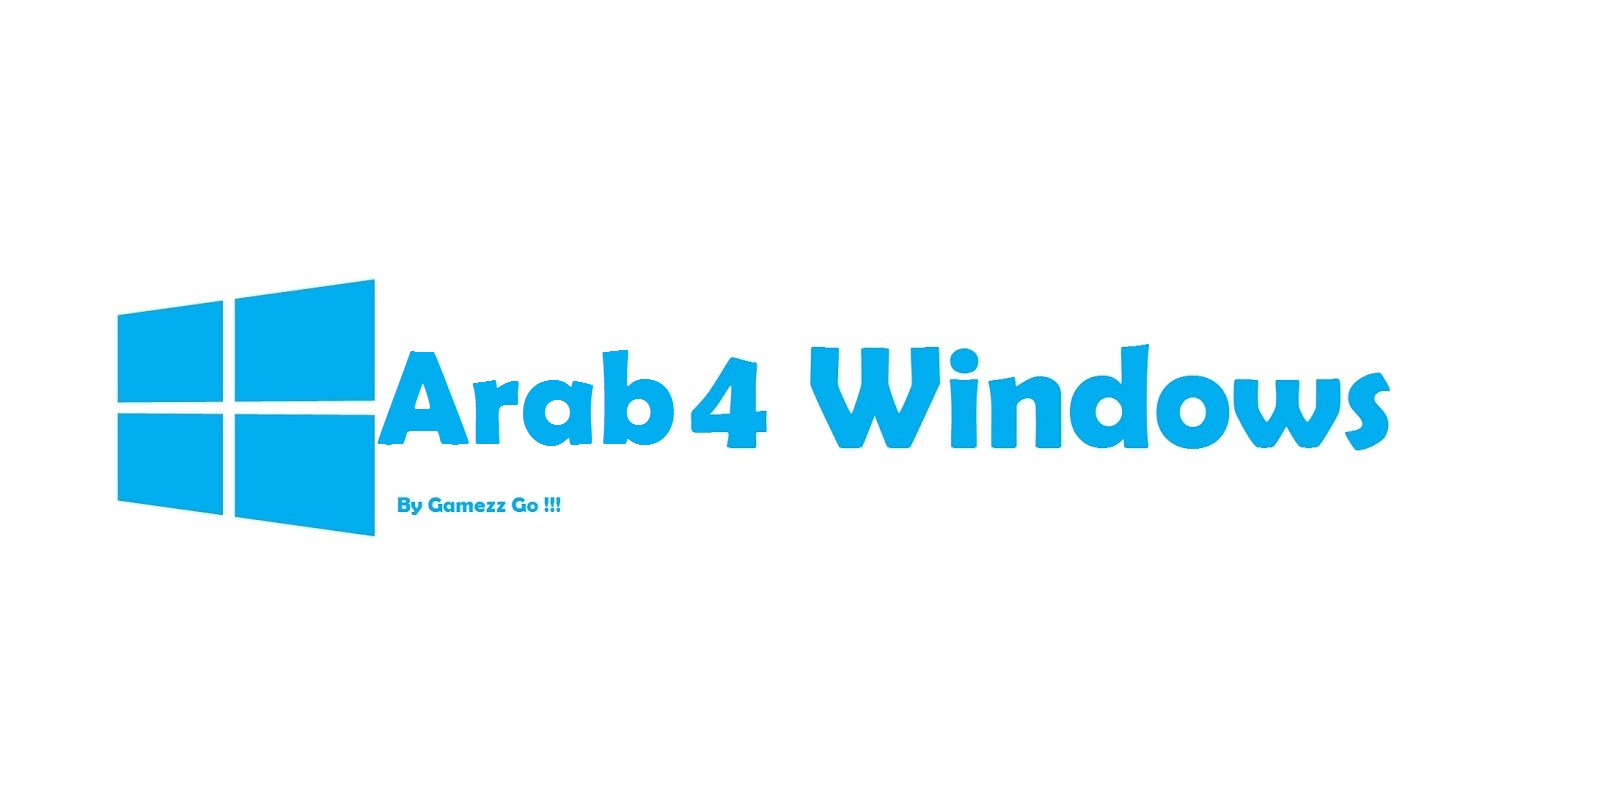 صندوق الوينداوز Arab 4 Windows